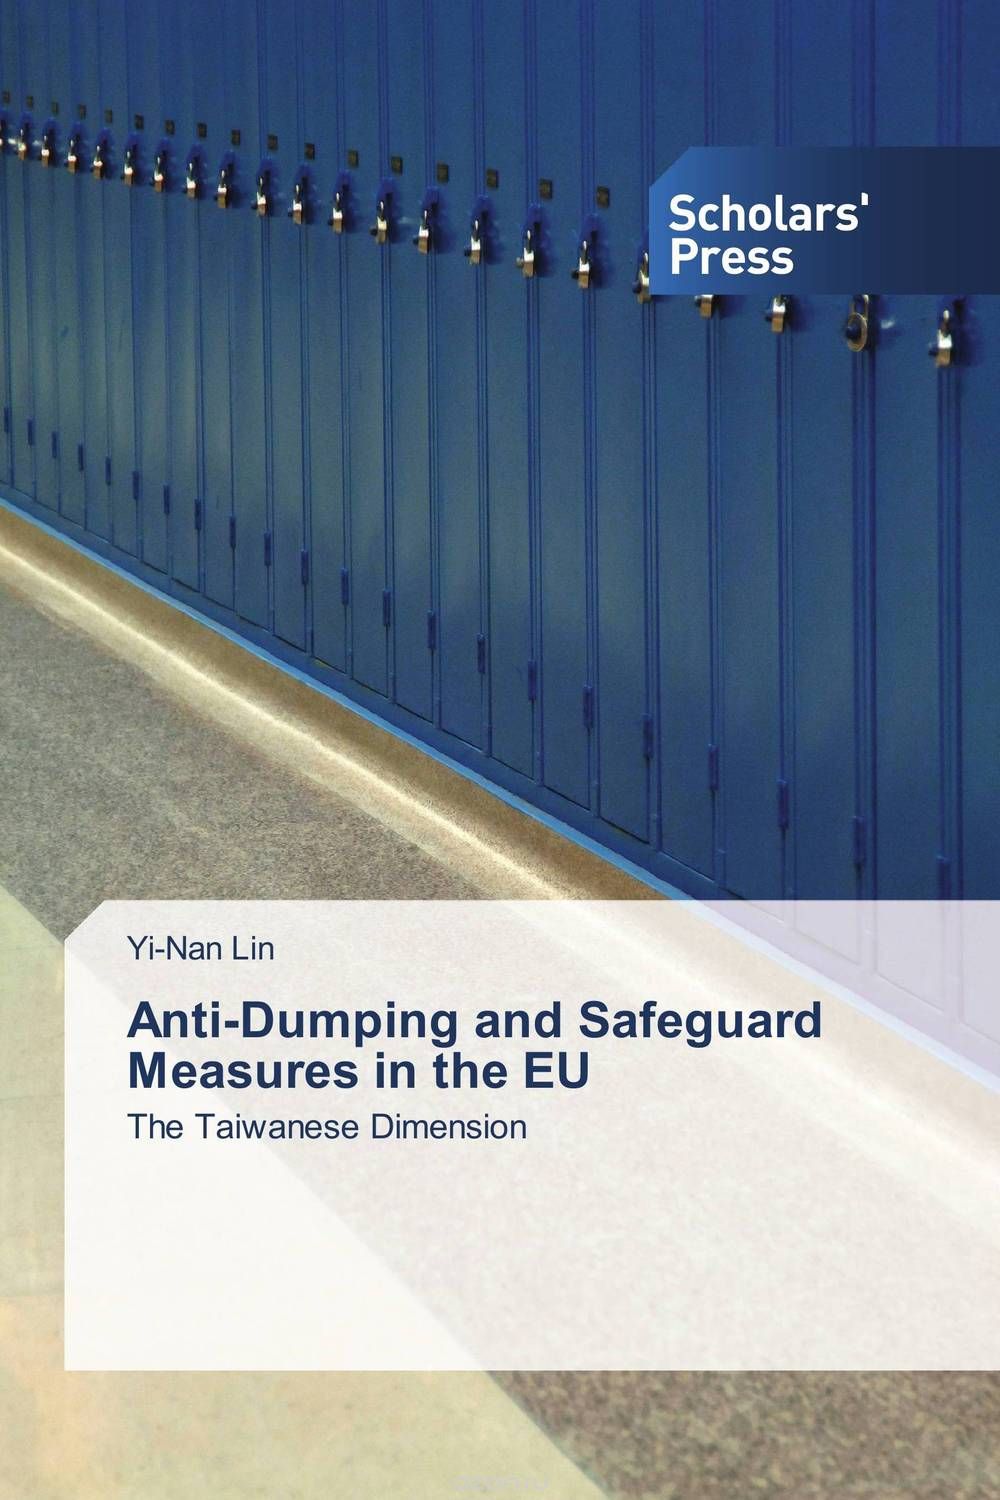 Скачать книгу "Anti-Dumping and Safeguard Measures in the EU"